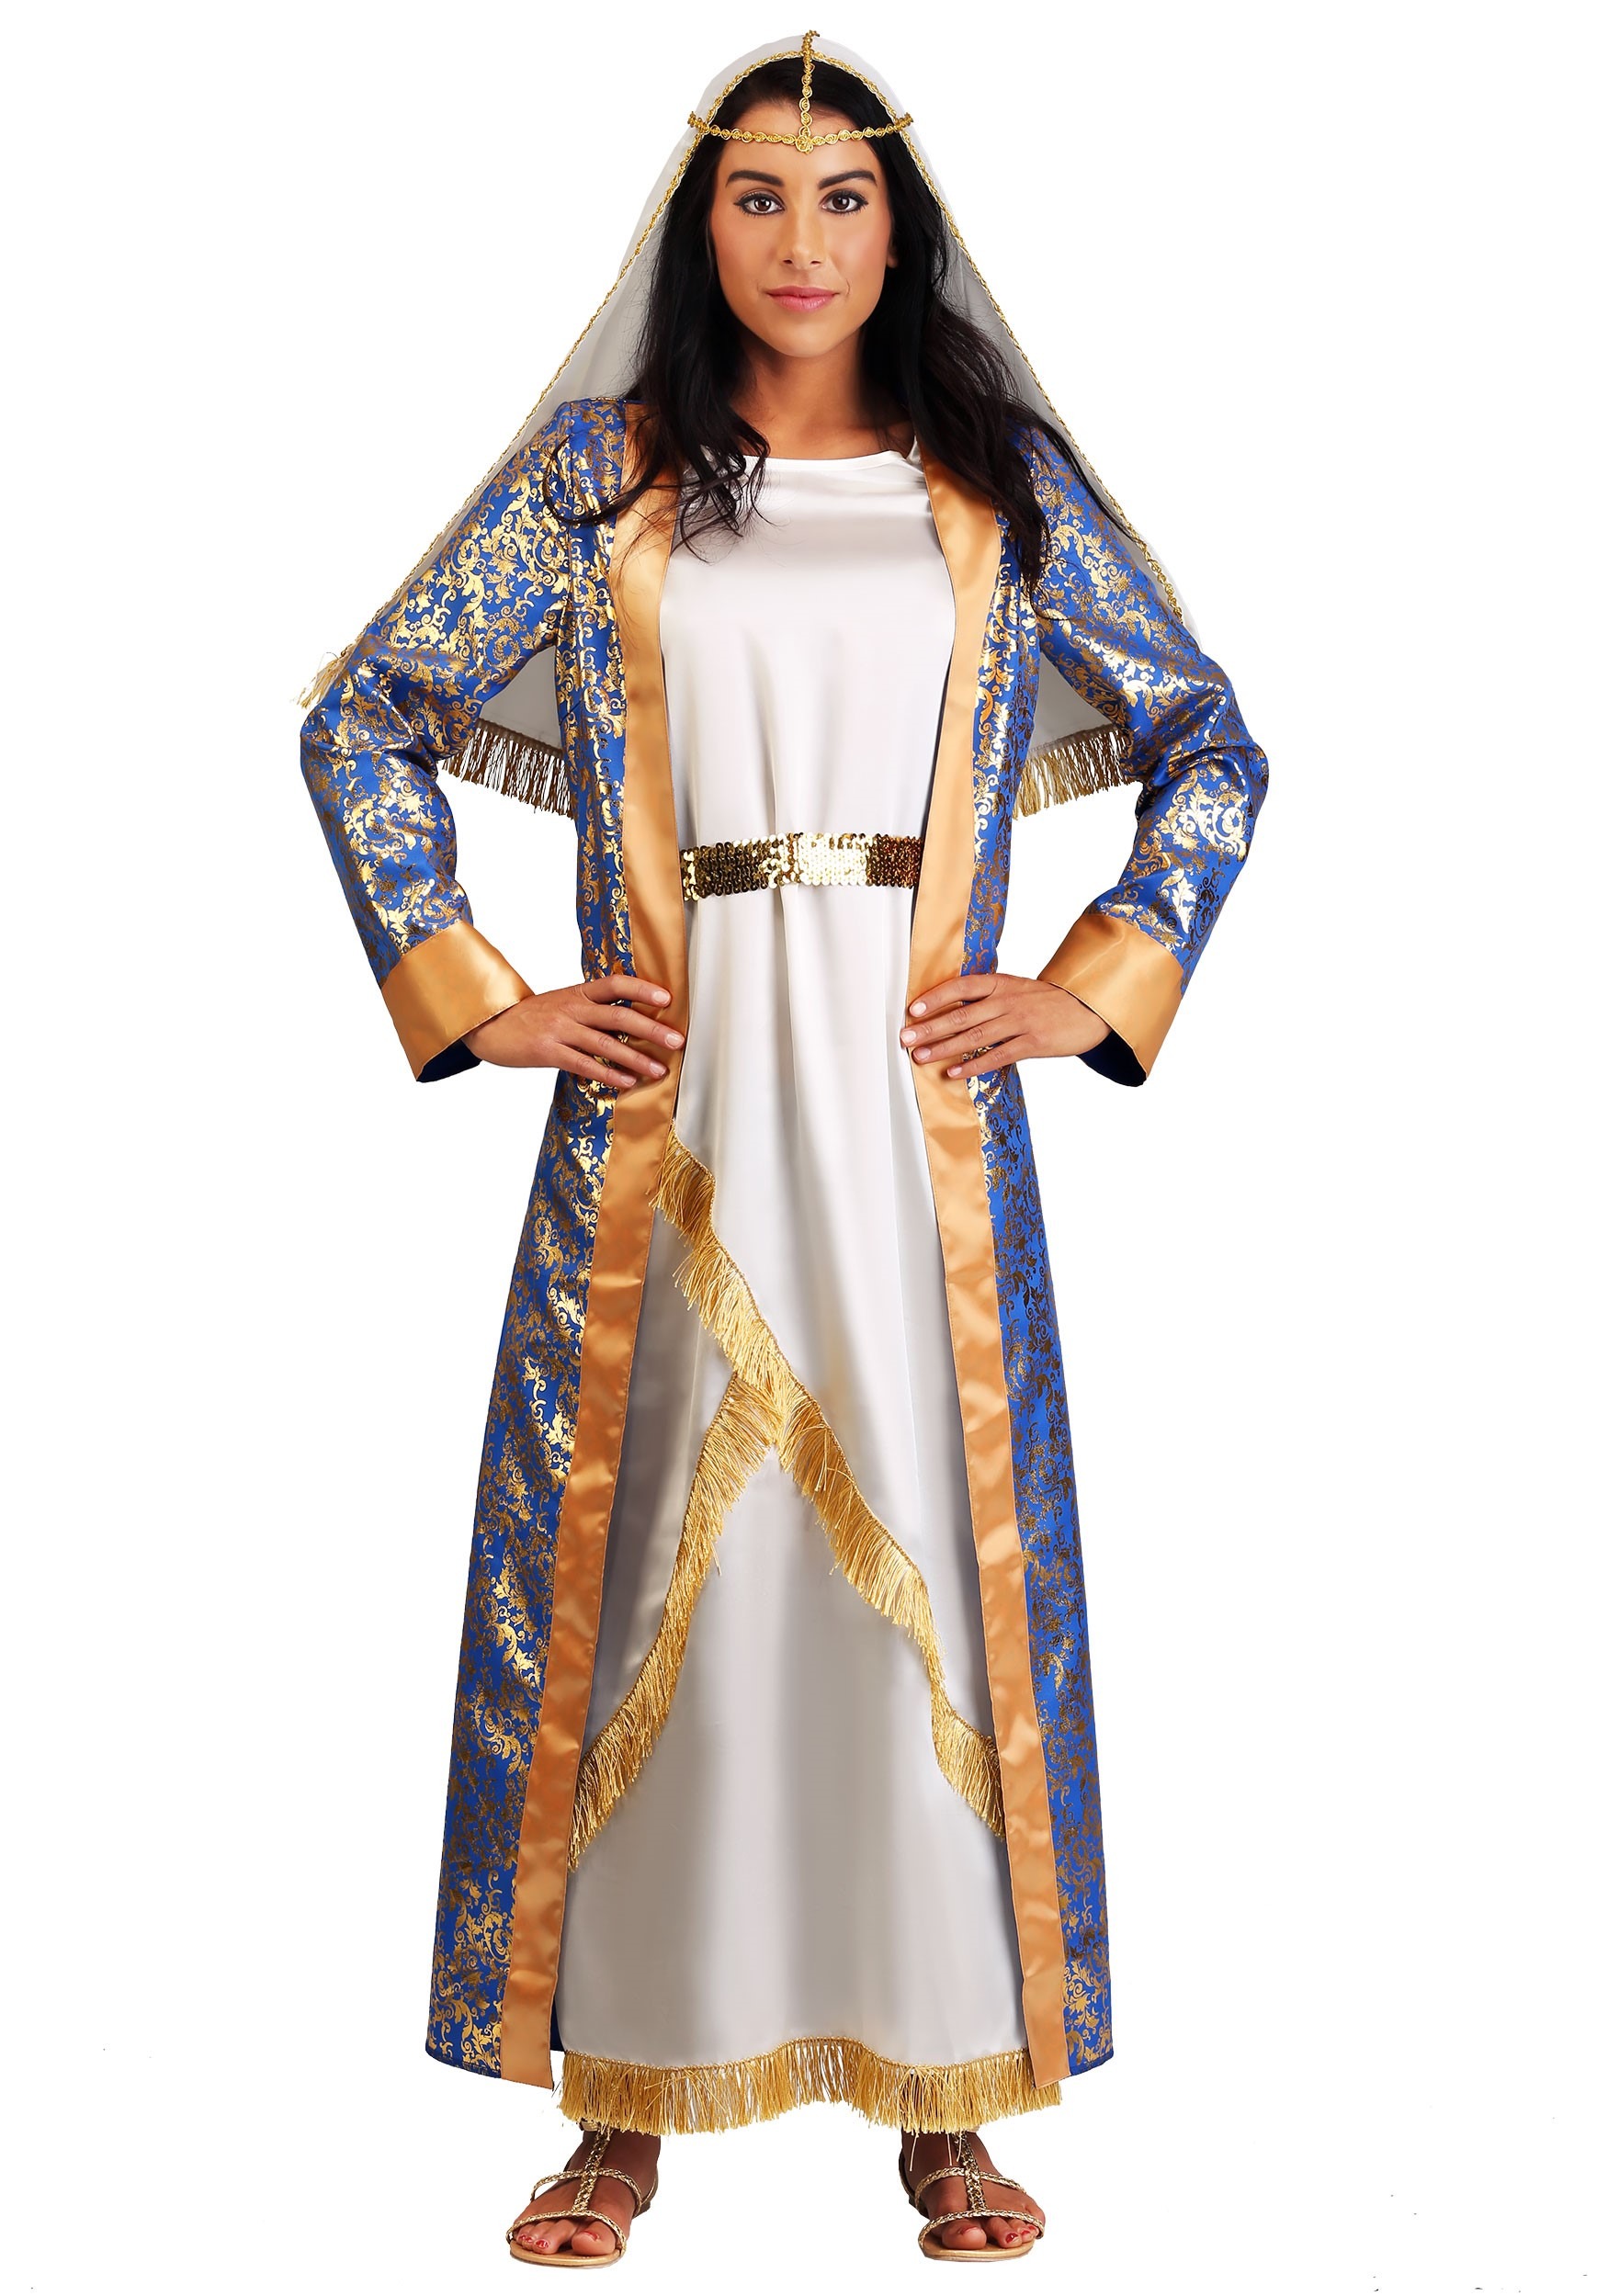 Queen Esther Costume for Women